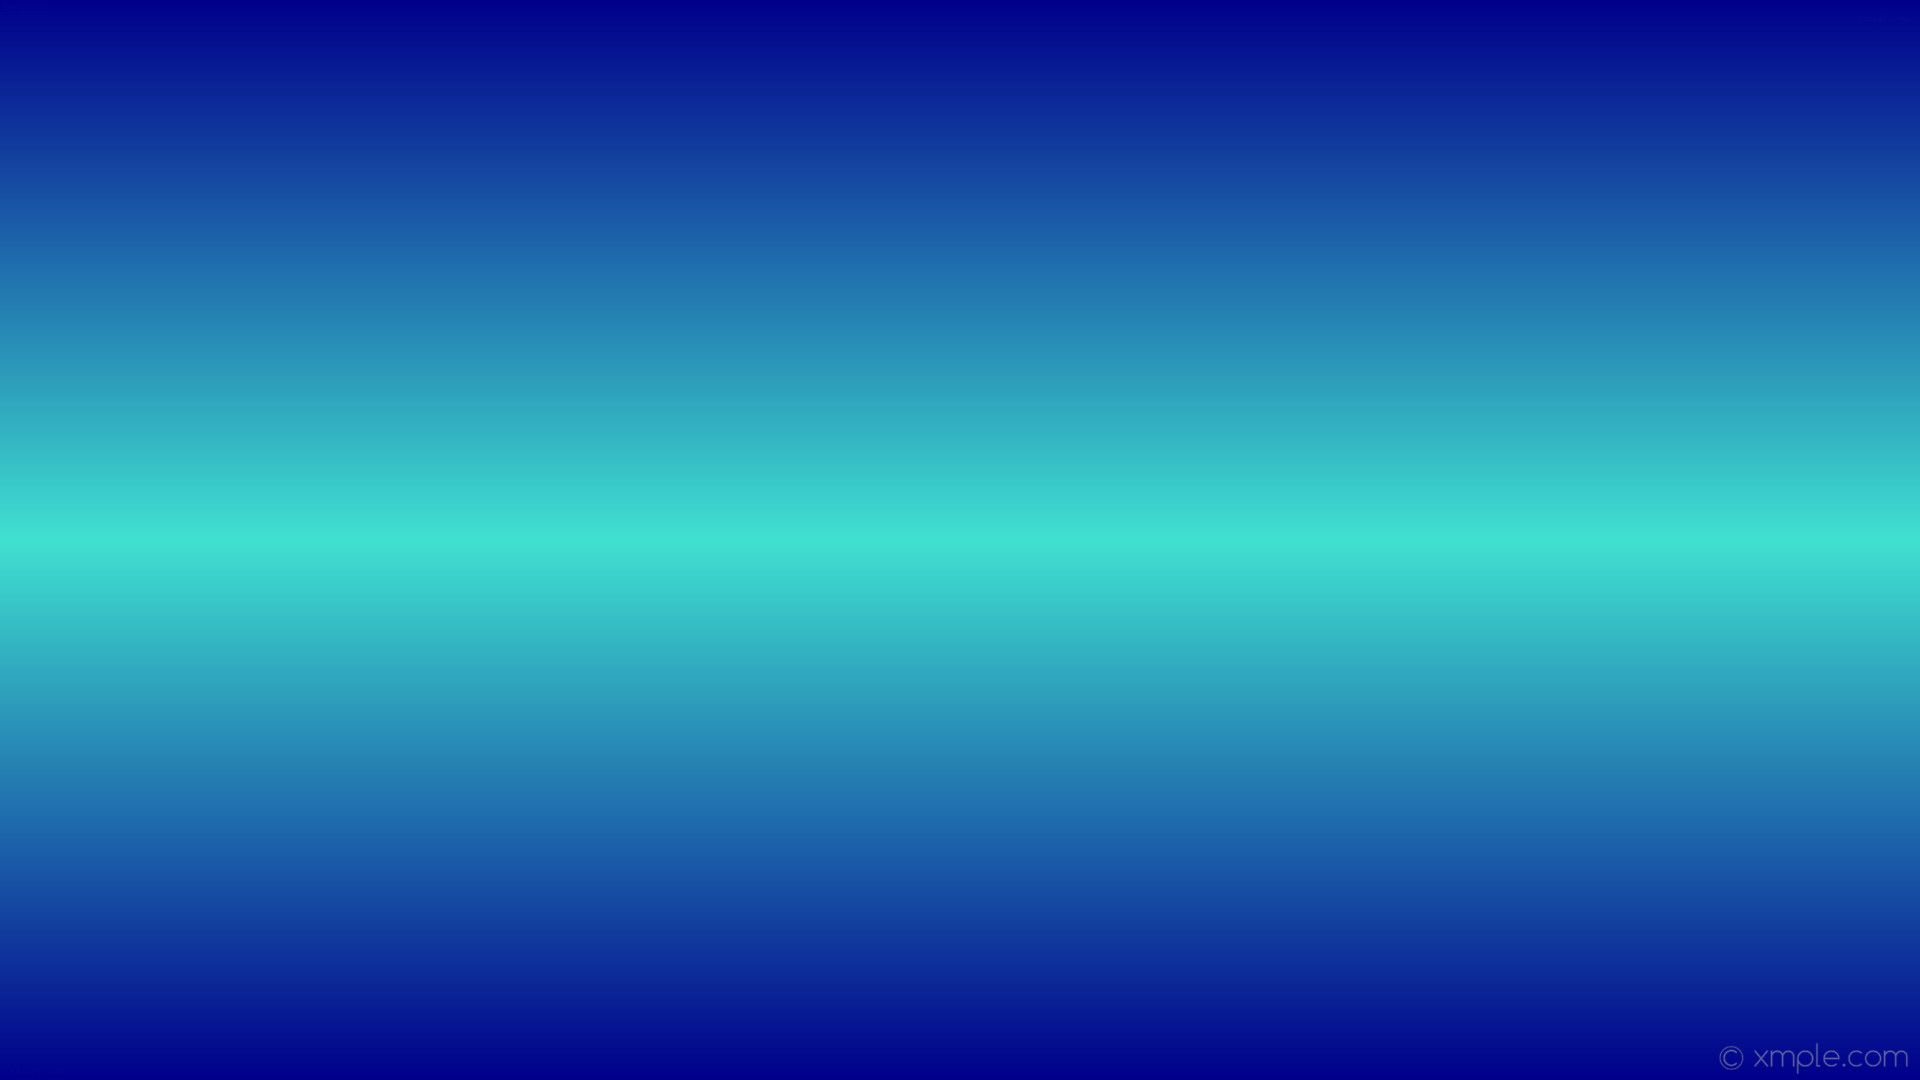 wallpaper highlight blue gradient linear dark blue turquoise #00008b  #40e0d0 90Â° 50%